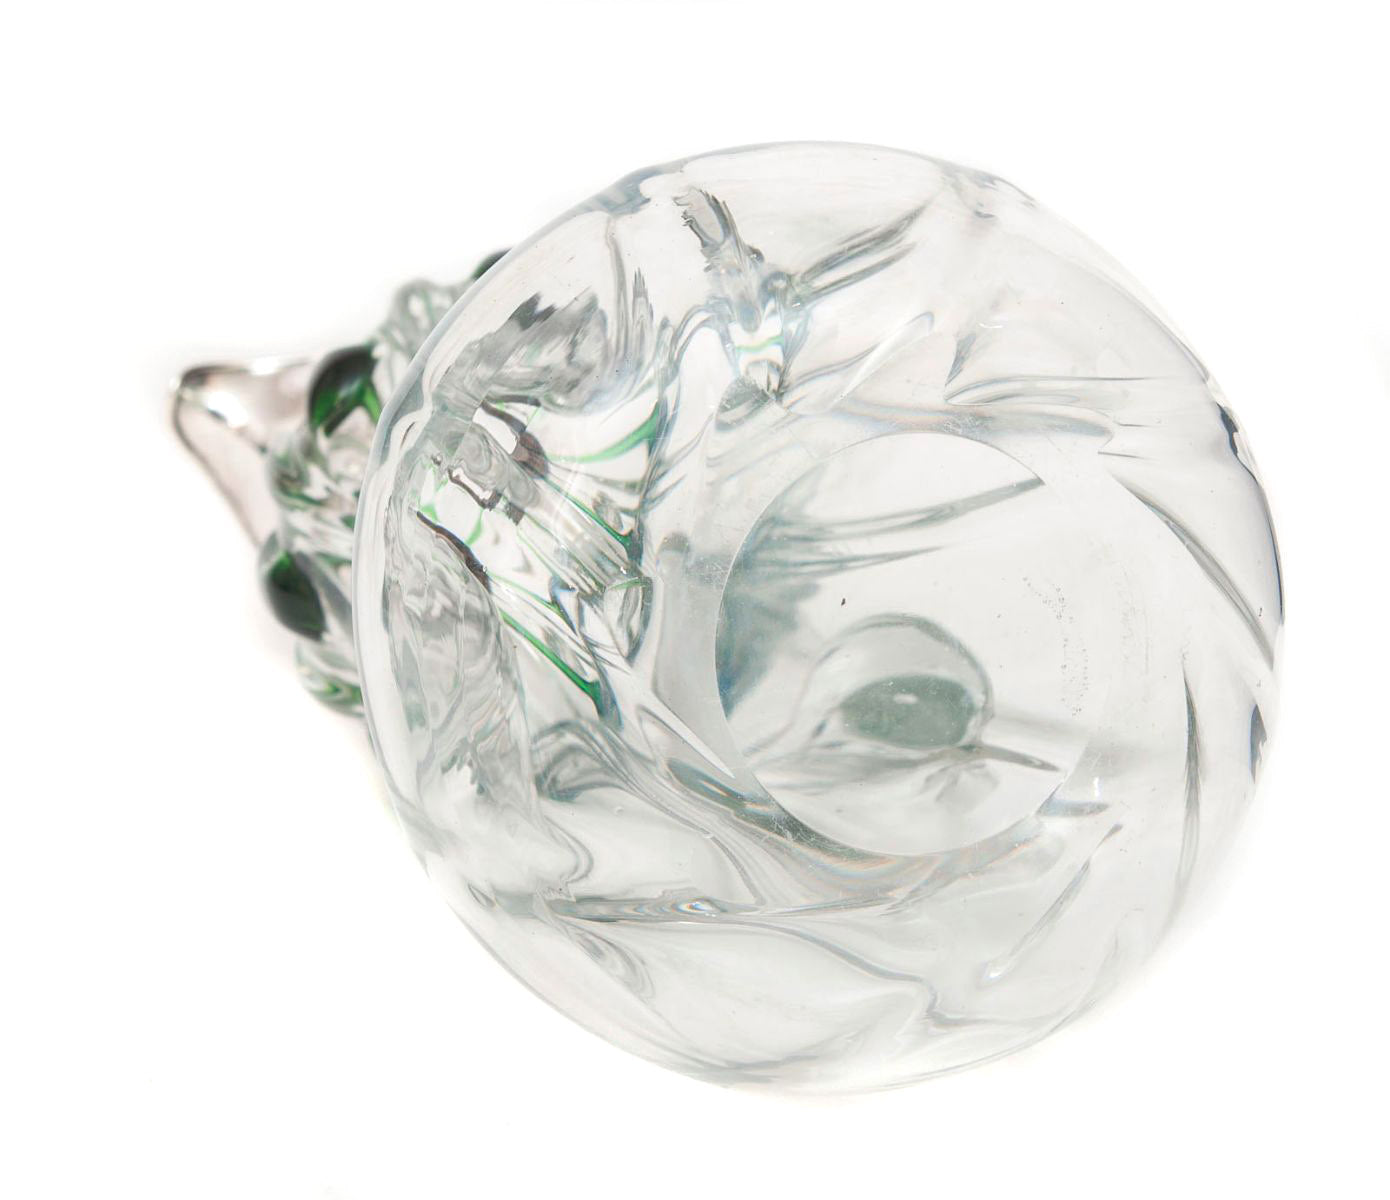 Antique Stuart Crystal Art Nouveau Silver & Green Glass Cairngorm Drop Decanter (Code 8265)